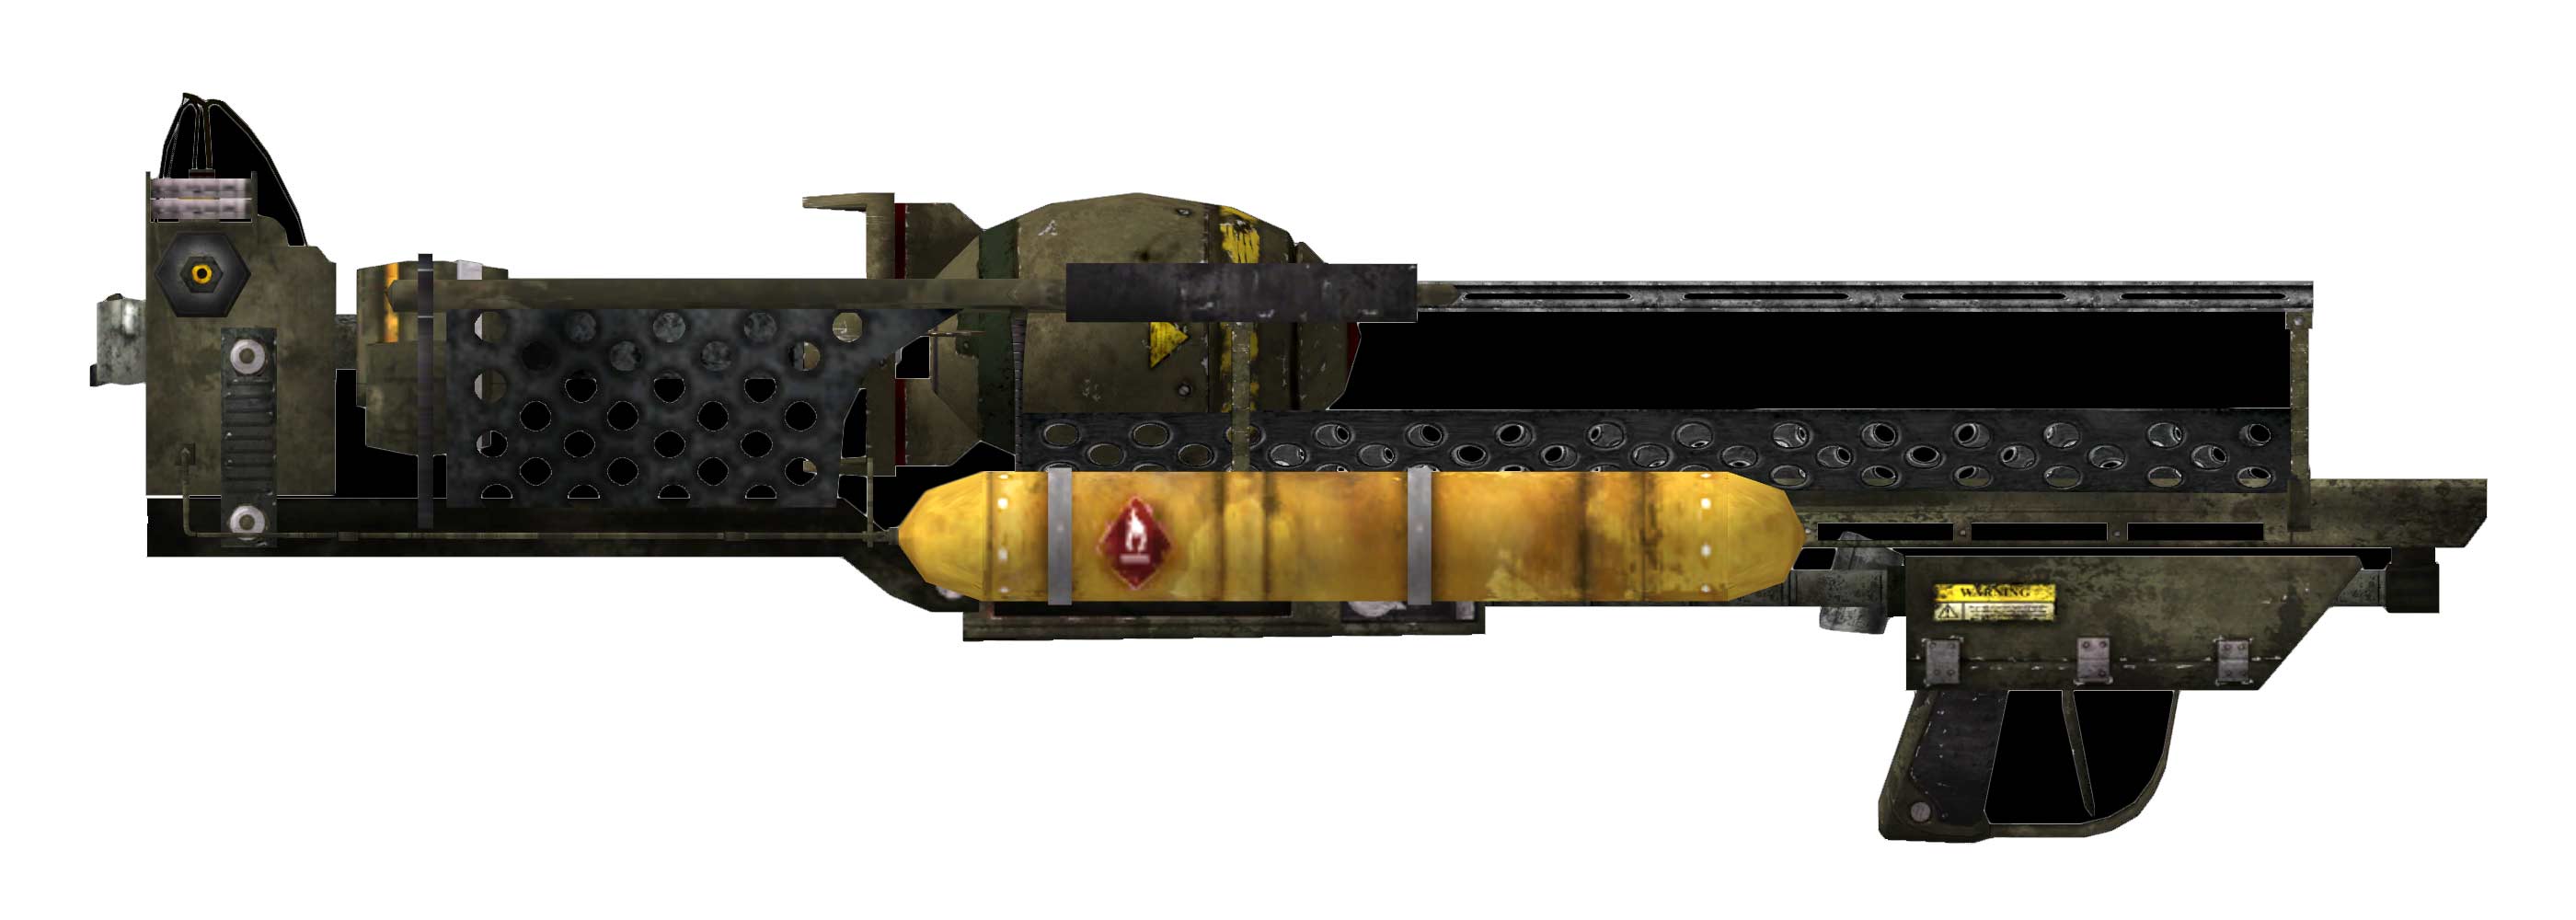 Fallout-3-Fatman-Gun-Weapon.jpg